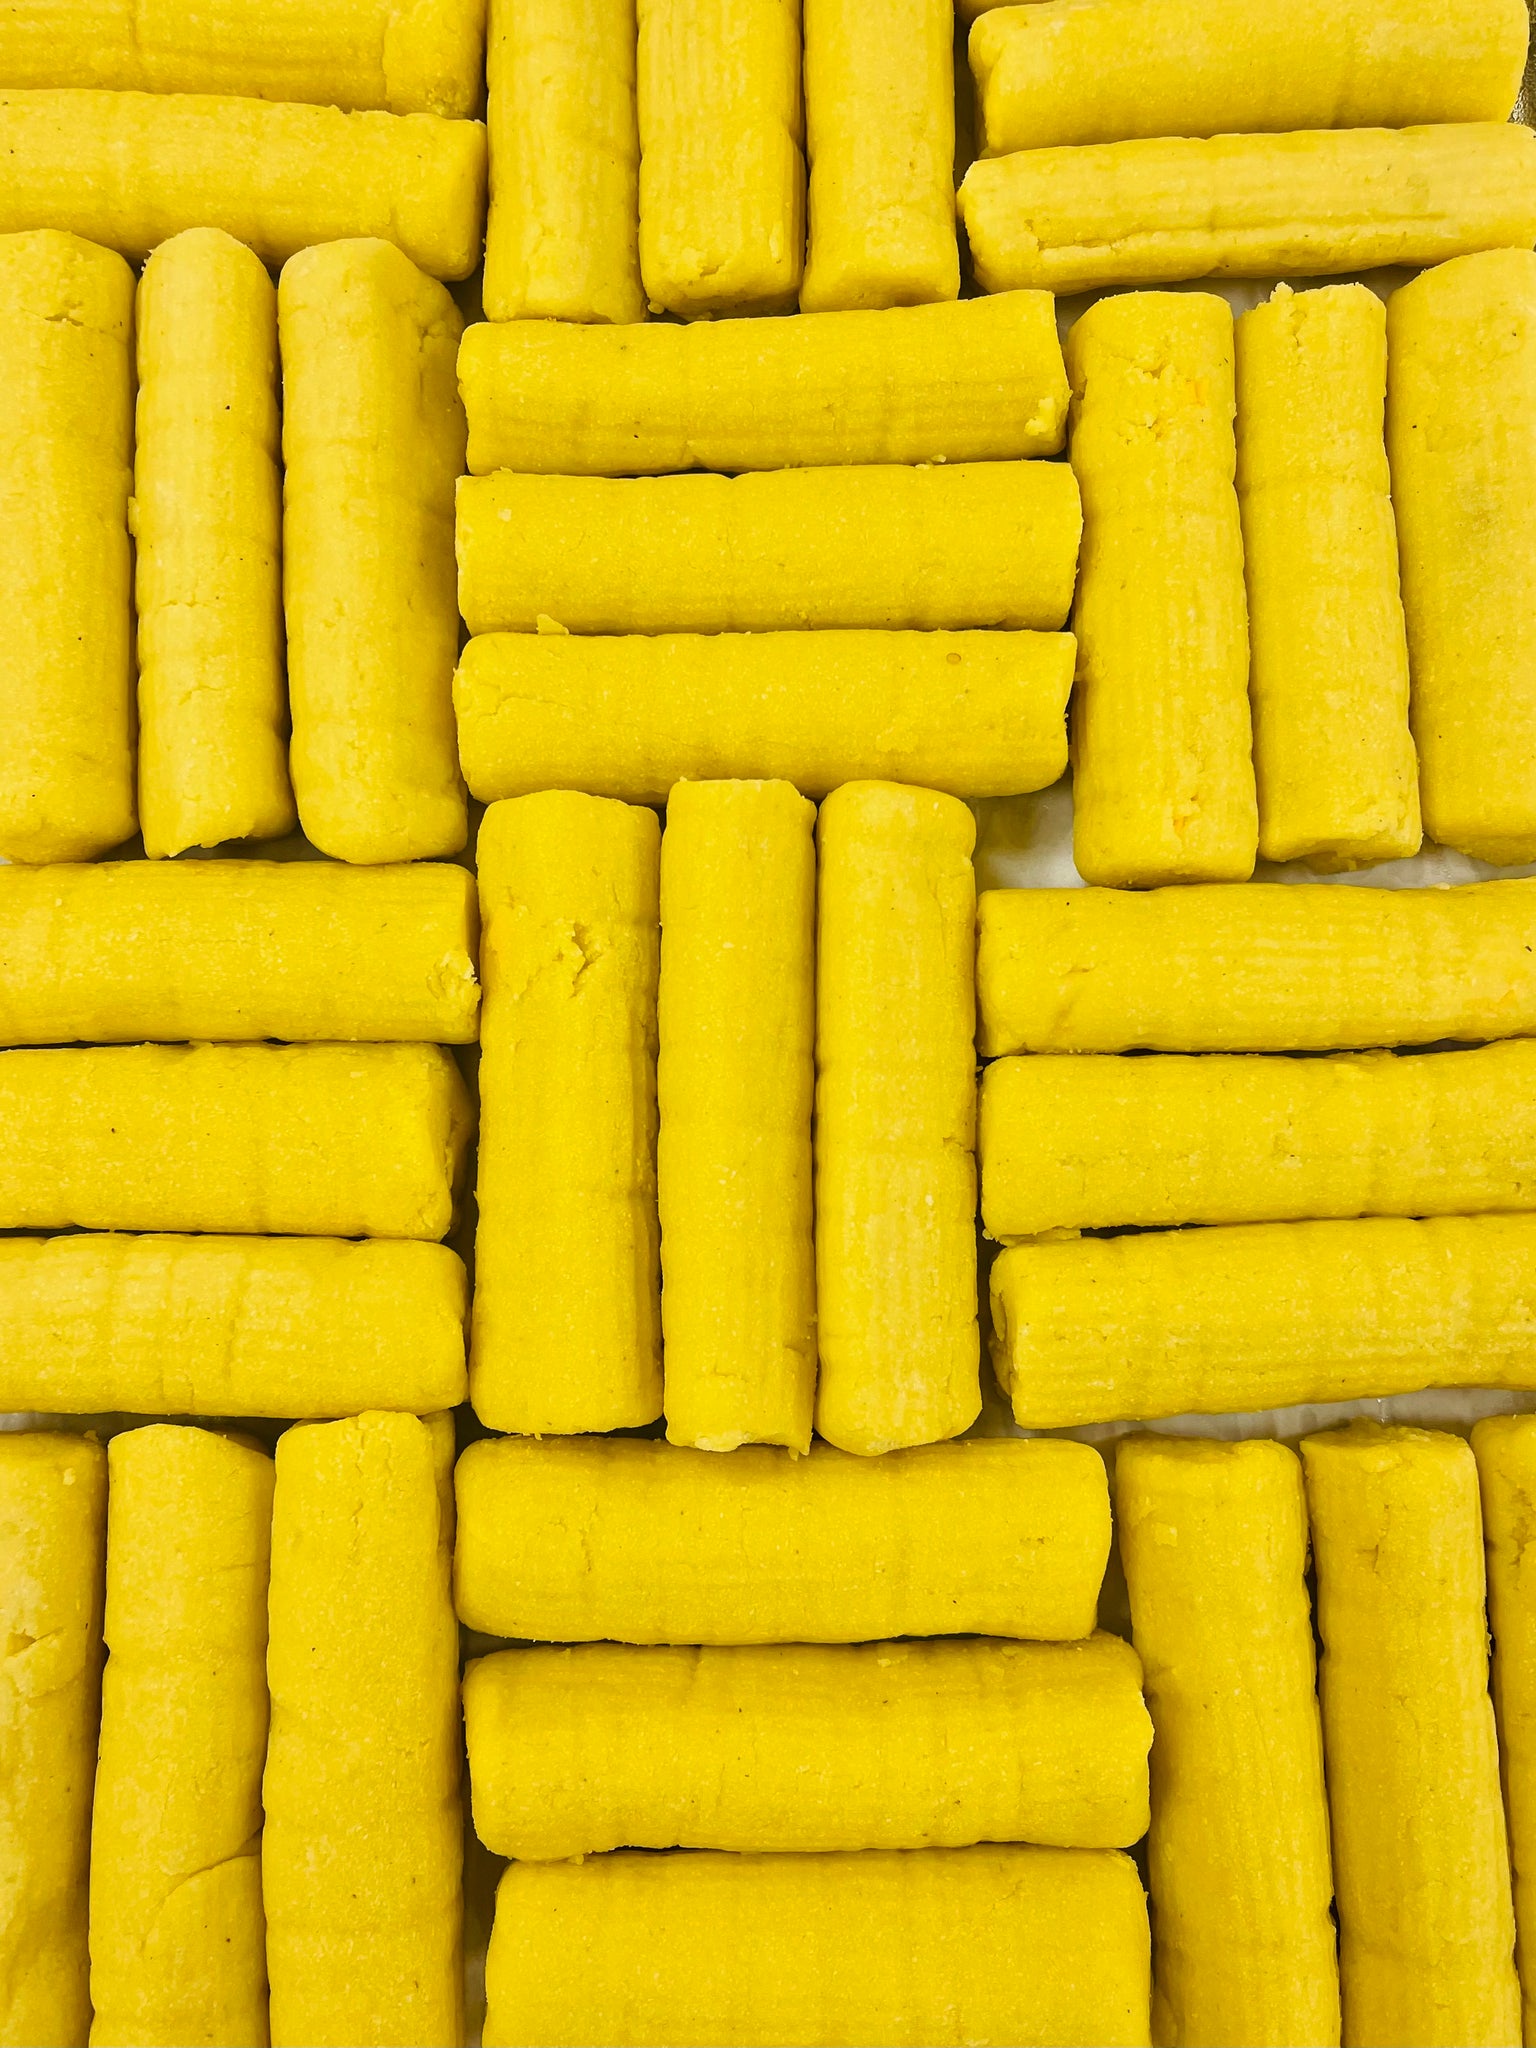 SORRULLITOS DE MAIZ RELLENOS DE QUESO (Corn Fritters Stuffed with cheese)